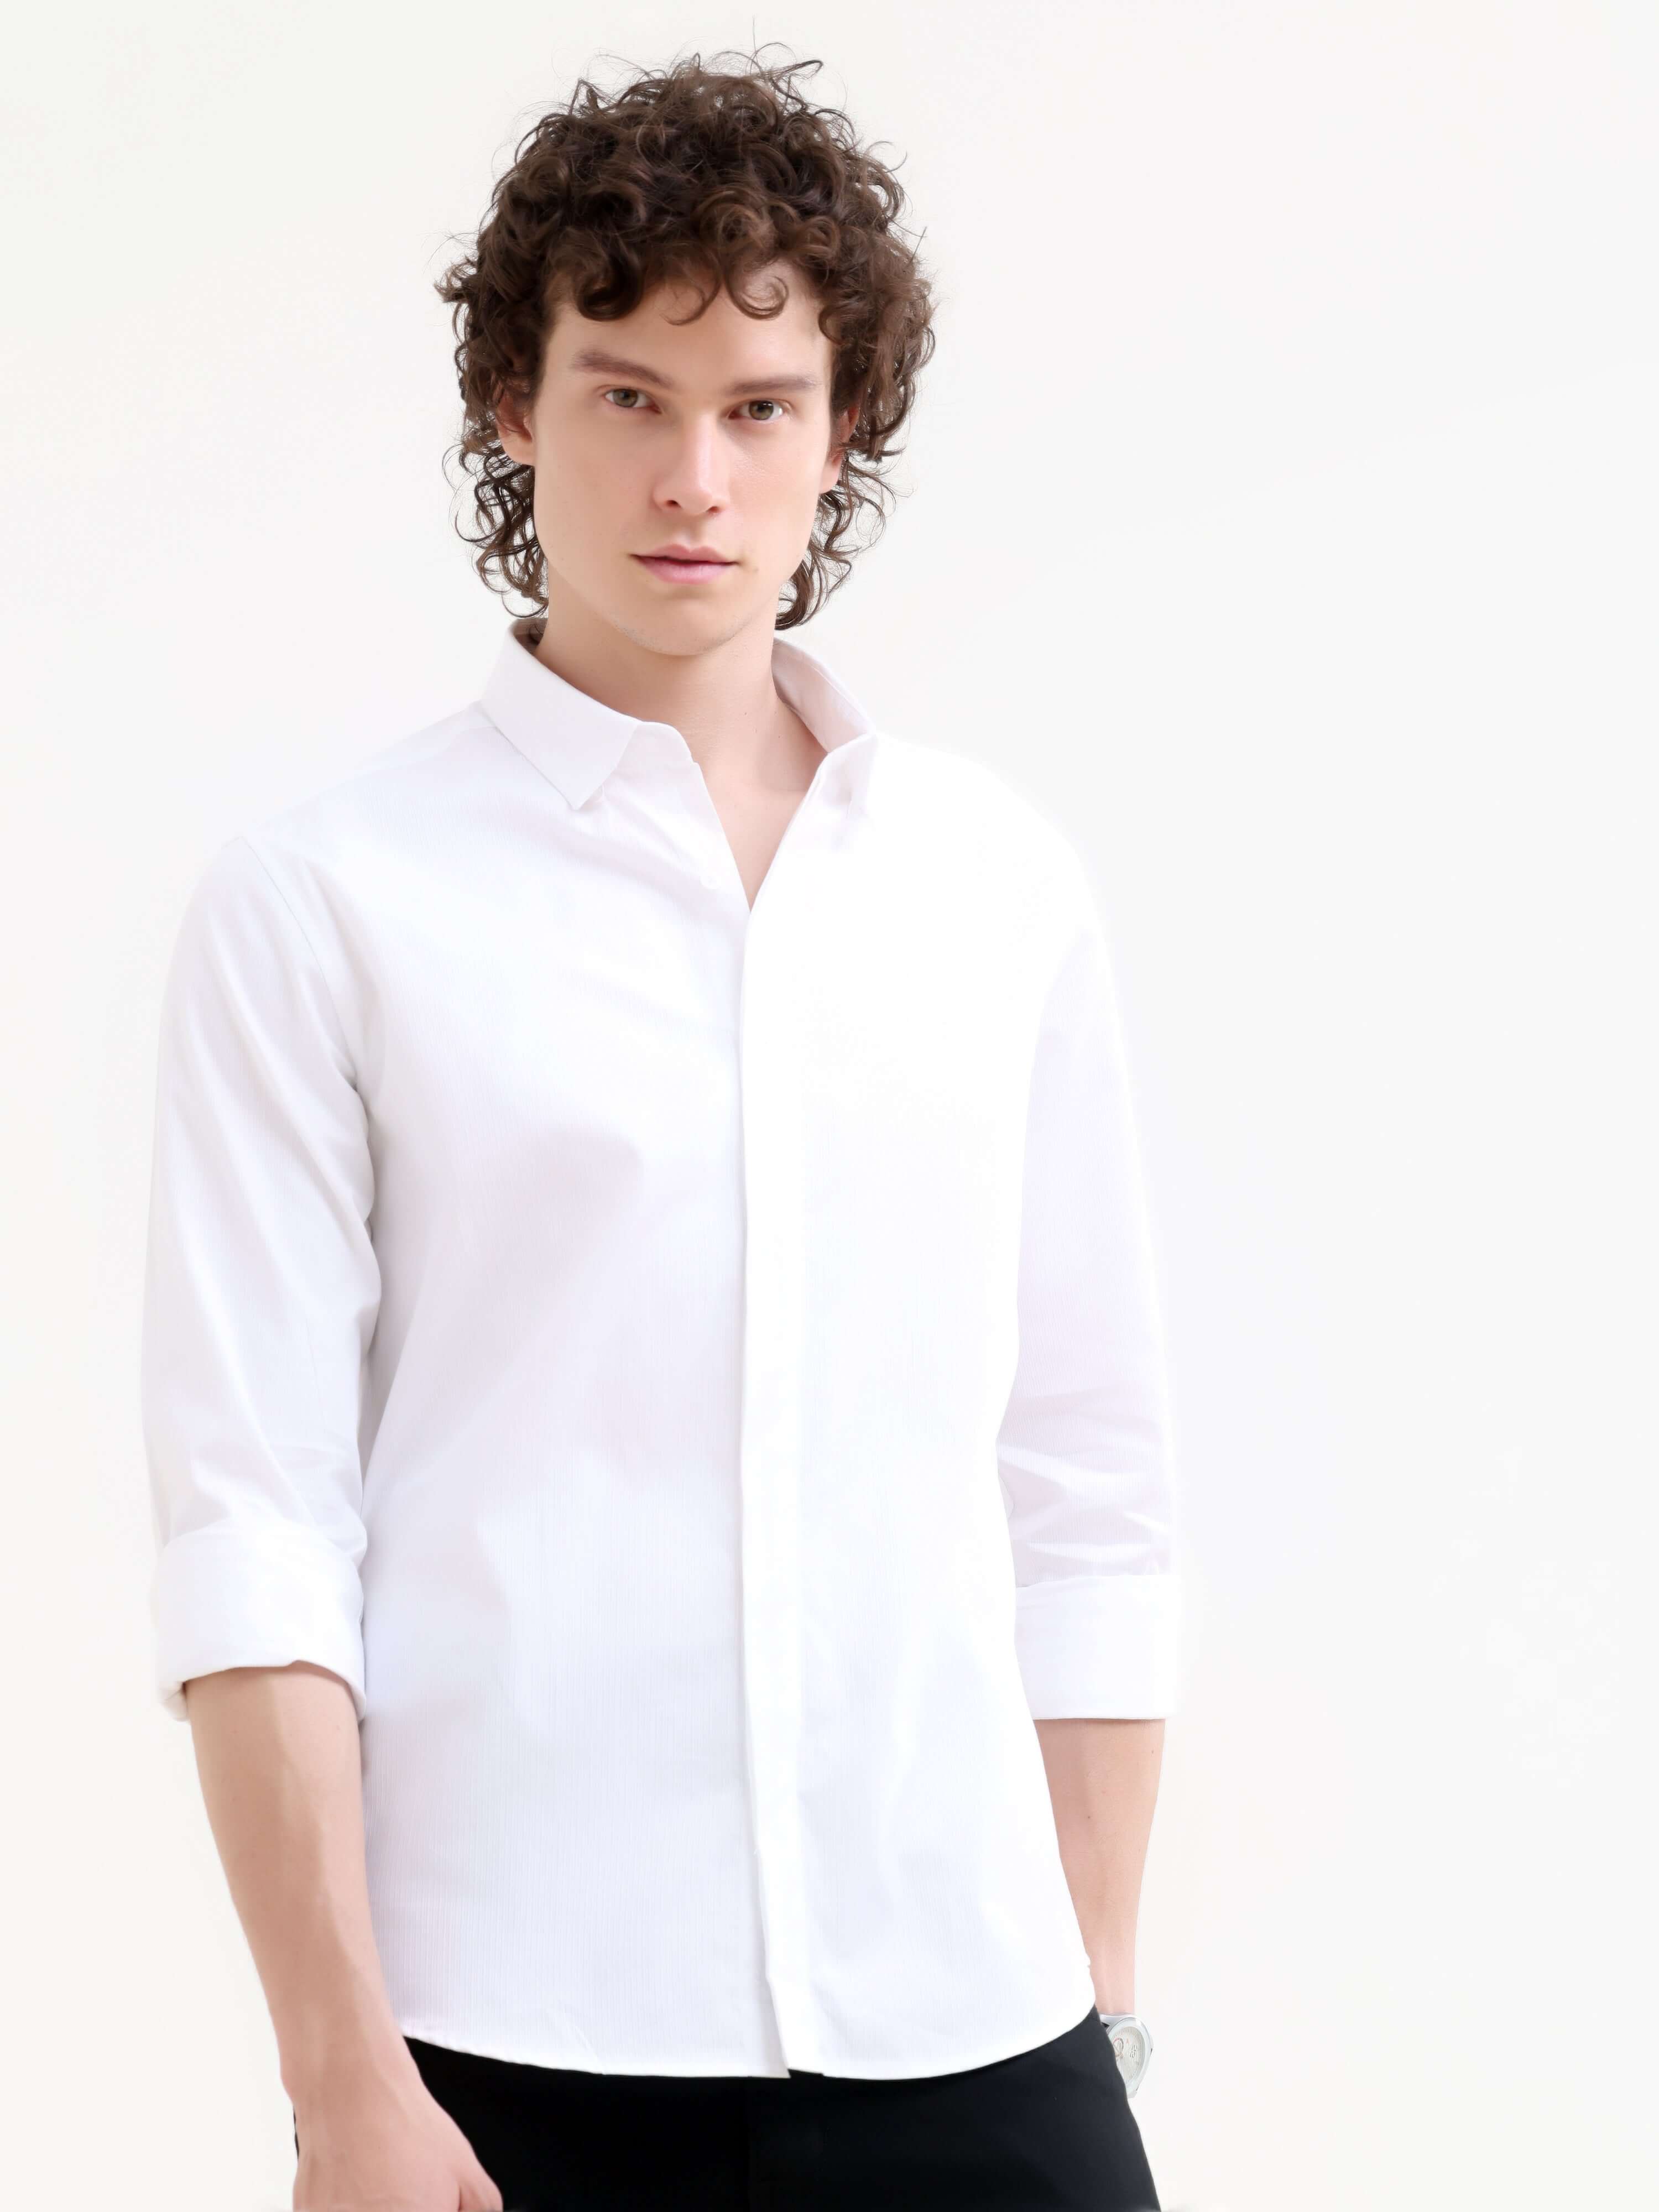 Layerr Dusky White Shirt - Men's Summer Essential shop online at Estilocus. Elevate summer style with Layerr's Dusky White Solid Shirt. Perfect fit, 100% cotton comfort. Shop the new arrival for your urban wardrobe.